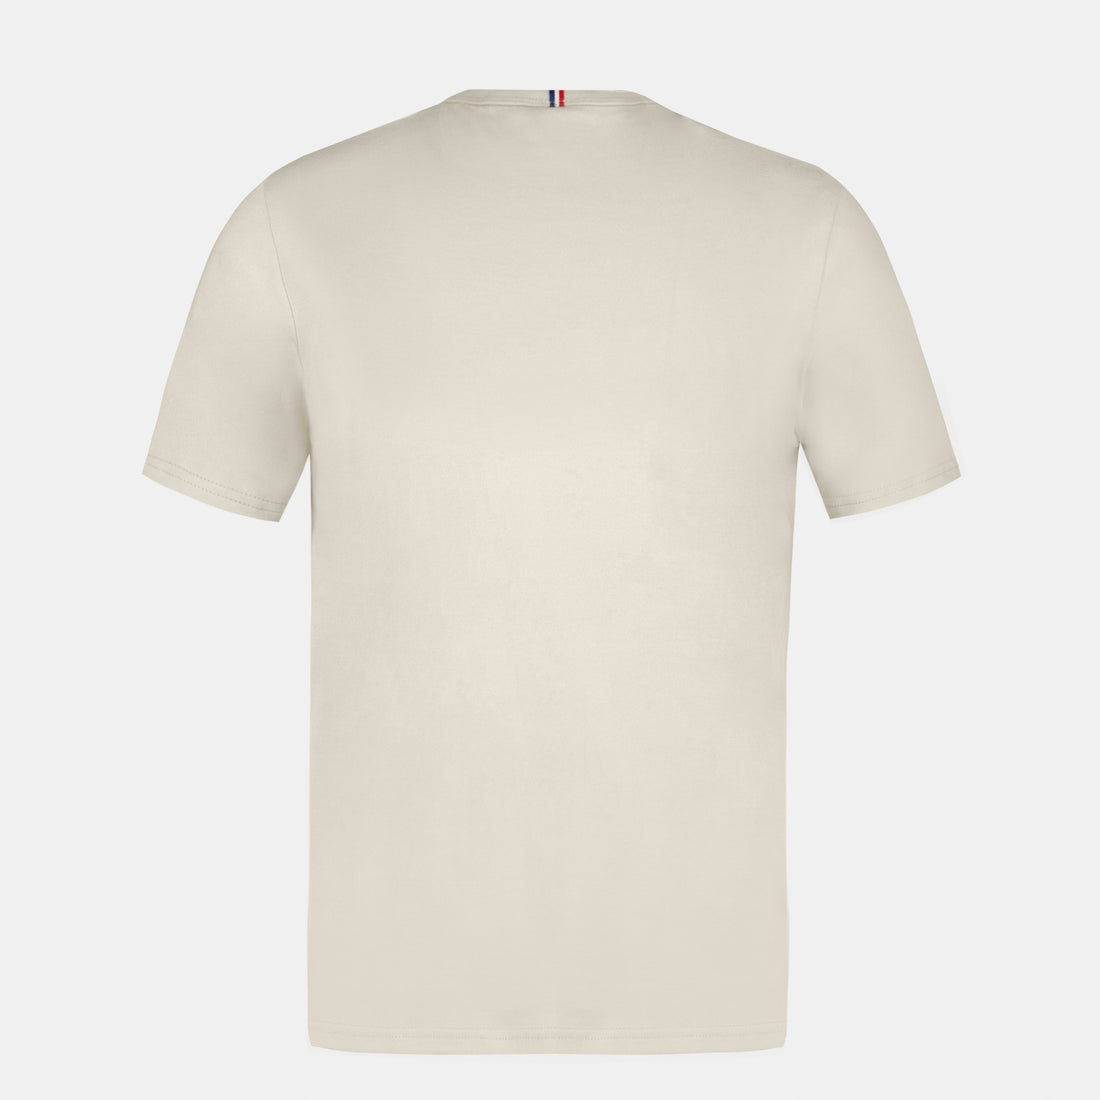 2422559-ESS Tee SS N°1 M peyote | T-shirt Homme